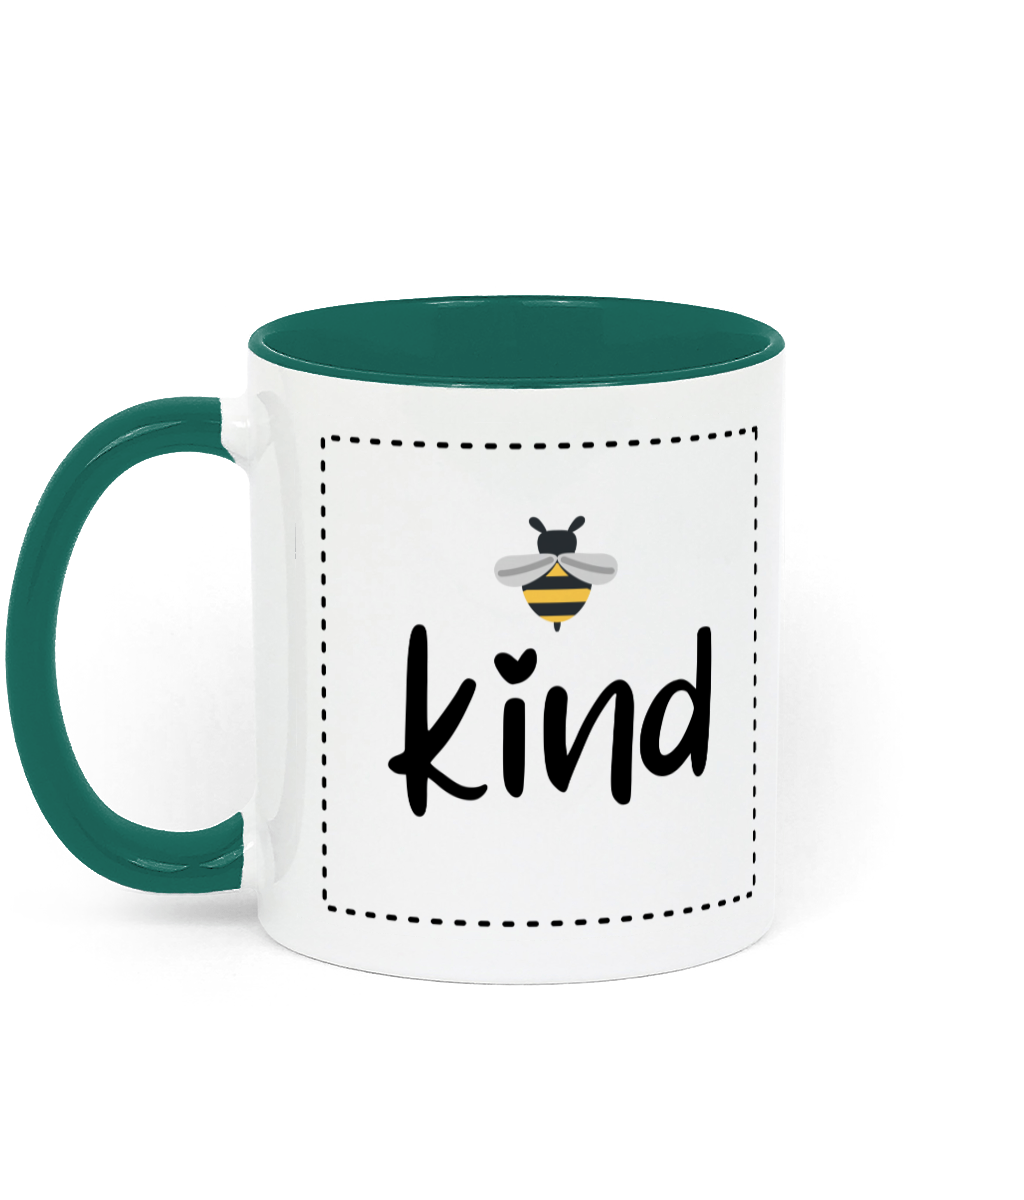 Be Kind Mug.11 oz mug. Daily Affirmations, Motivation, Inspiration. Perfect Gift. Two-toned.